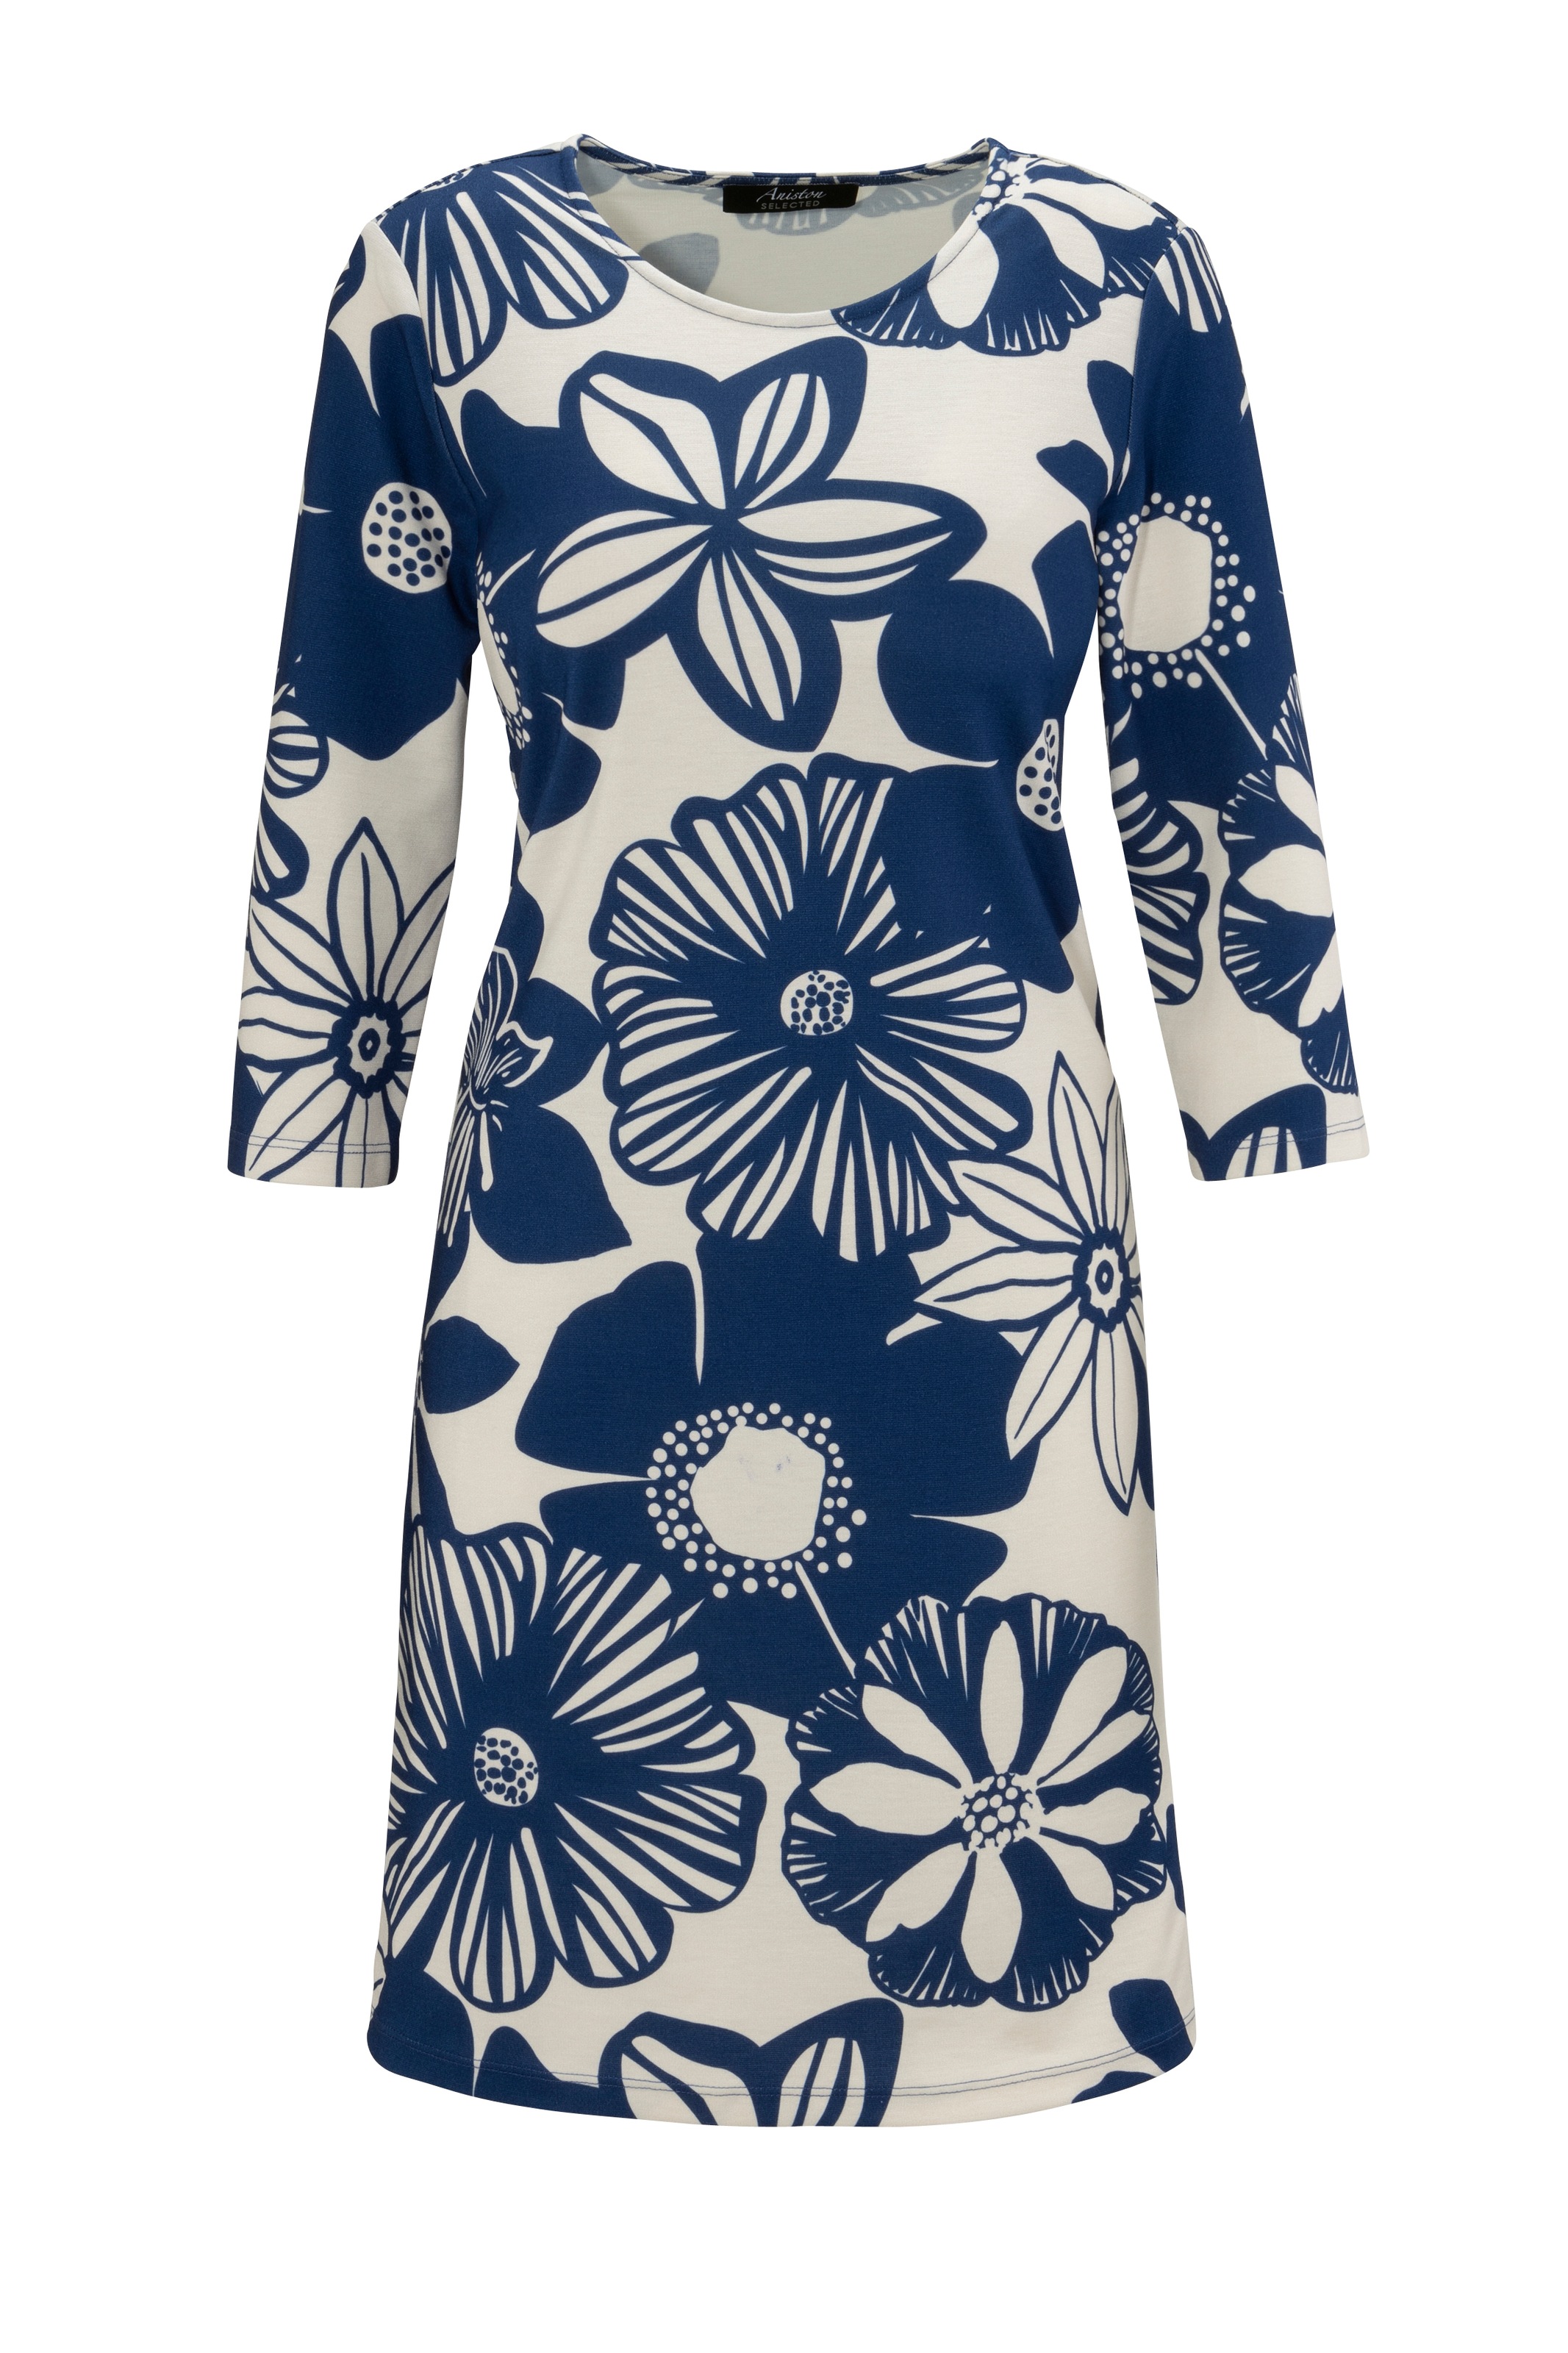 großem - Blütendruck mit - Teil Unikat Aniston KOLLEKTION SELECTED ein NEUE Jerseykleid, kaufen Jedes